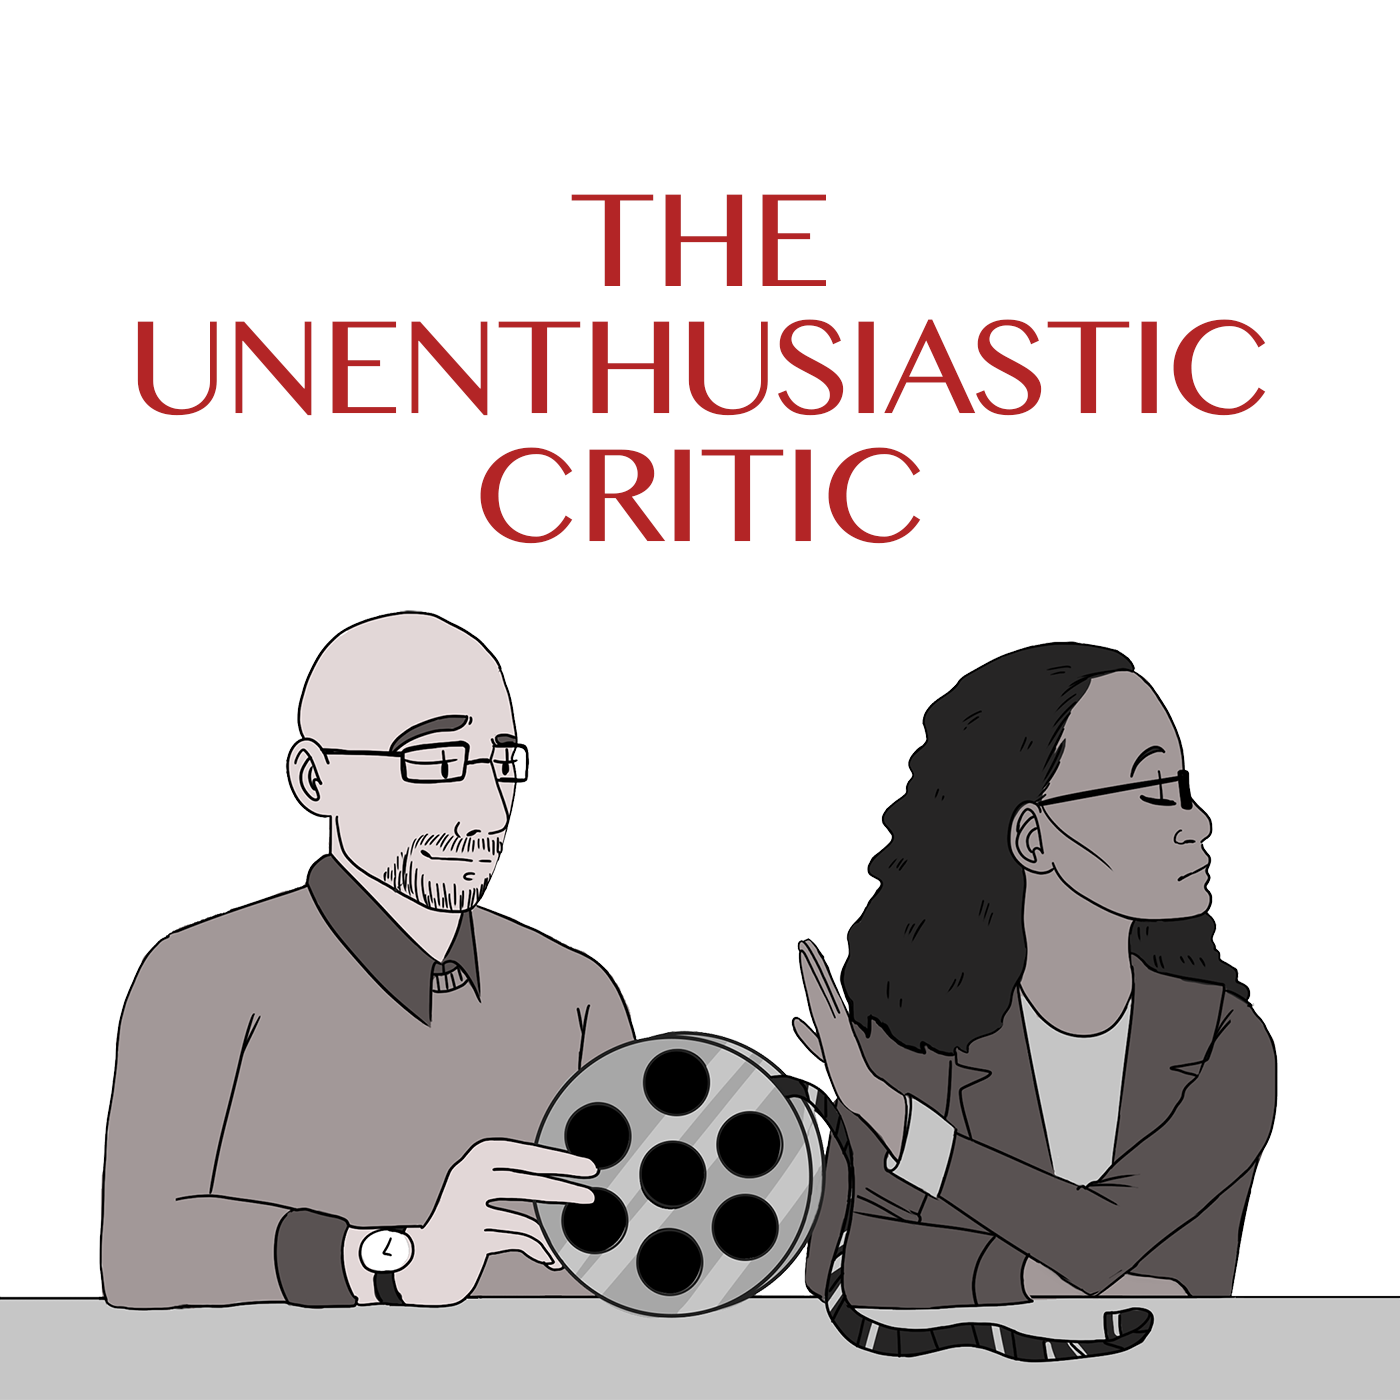 The Unenthusiastic Critic